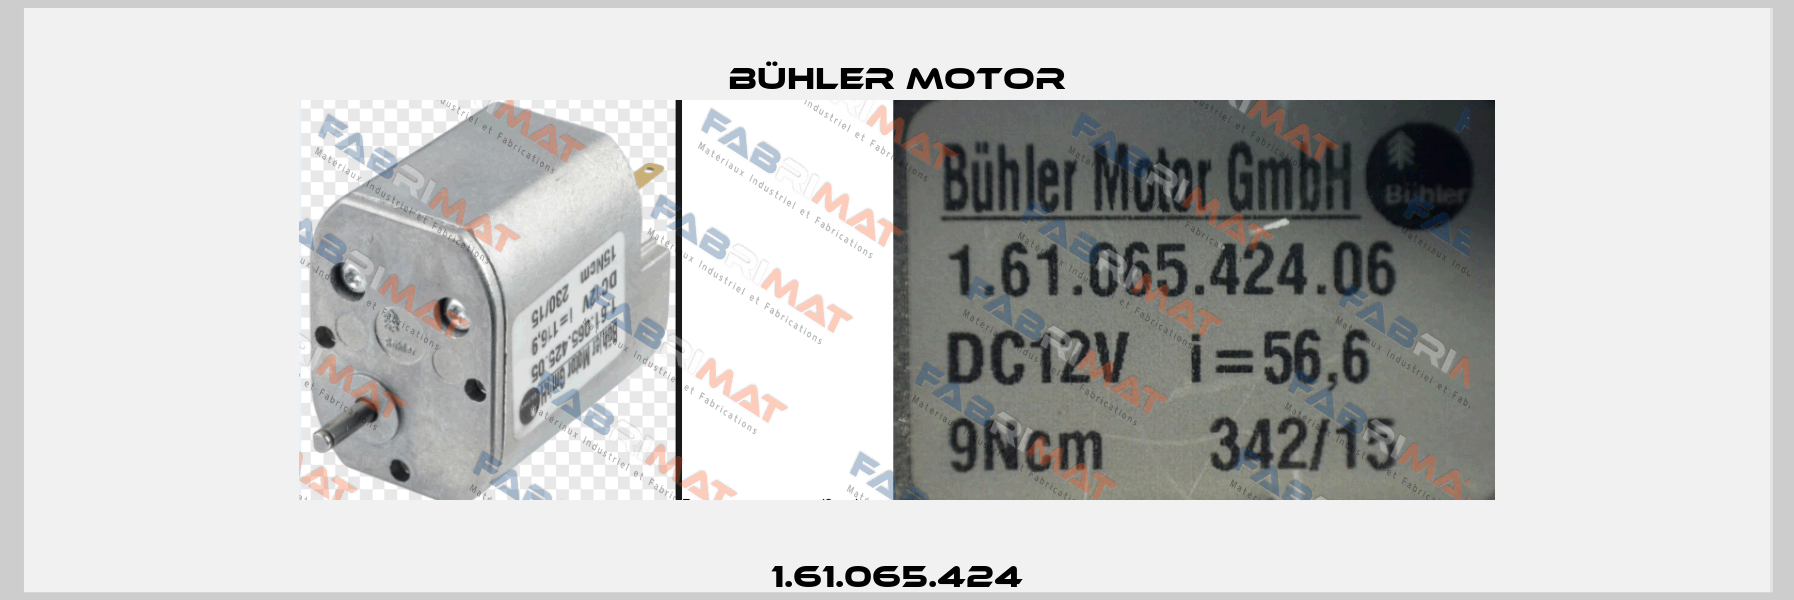 1.61.065.424 Bühler Motor